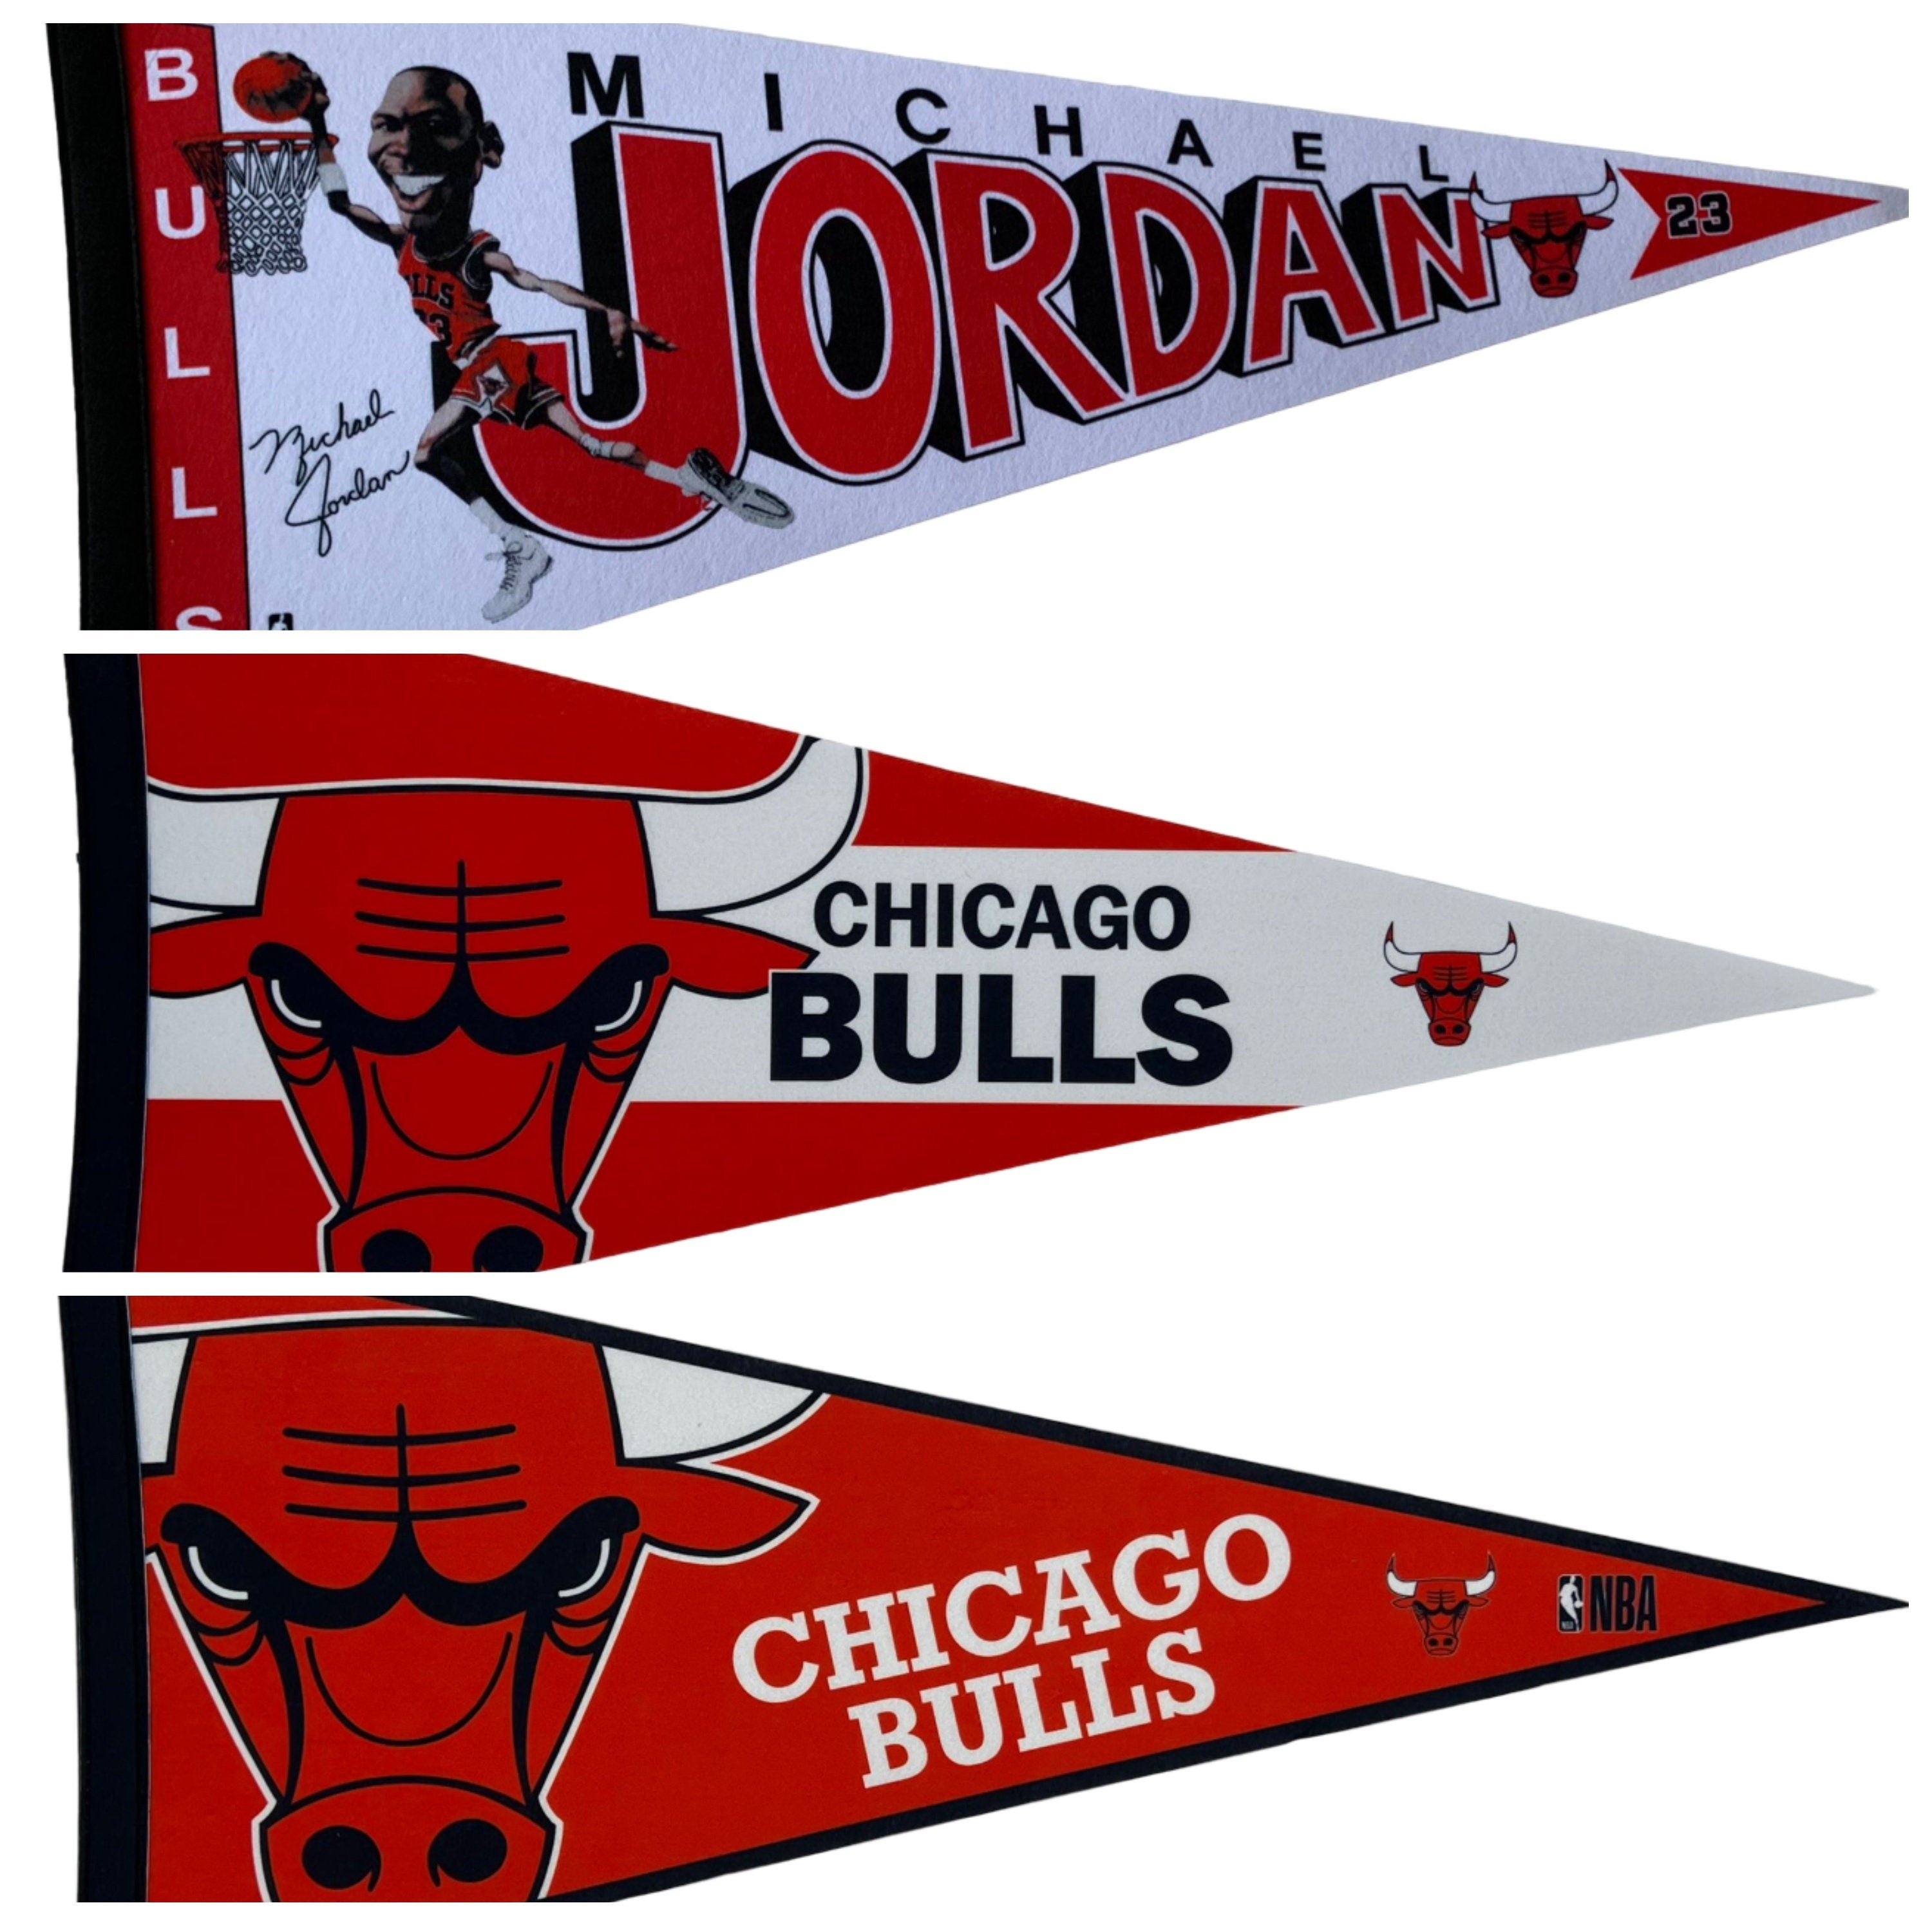 Michael Jordan Chicago Bulls nbapennants vaantje vlaggetje vlag vaantje fanion pennant flag basketball michael jordan usa 23 MJ pippen rodma - Michael Jordan